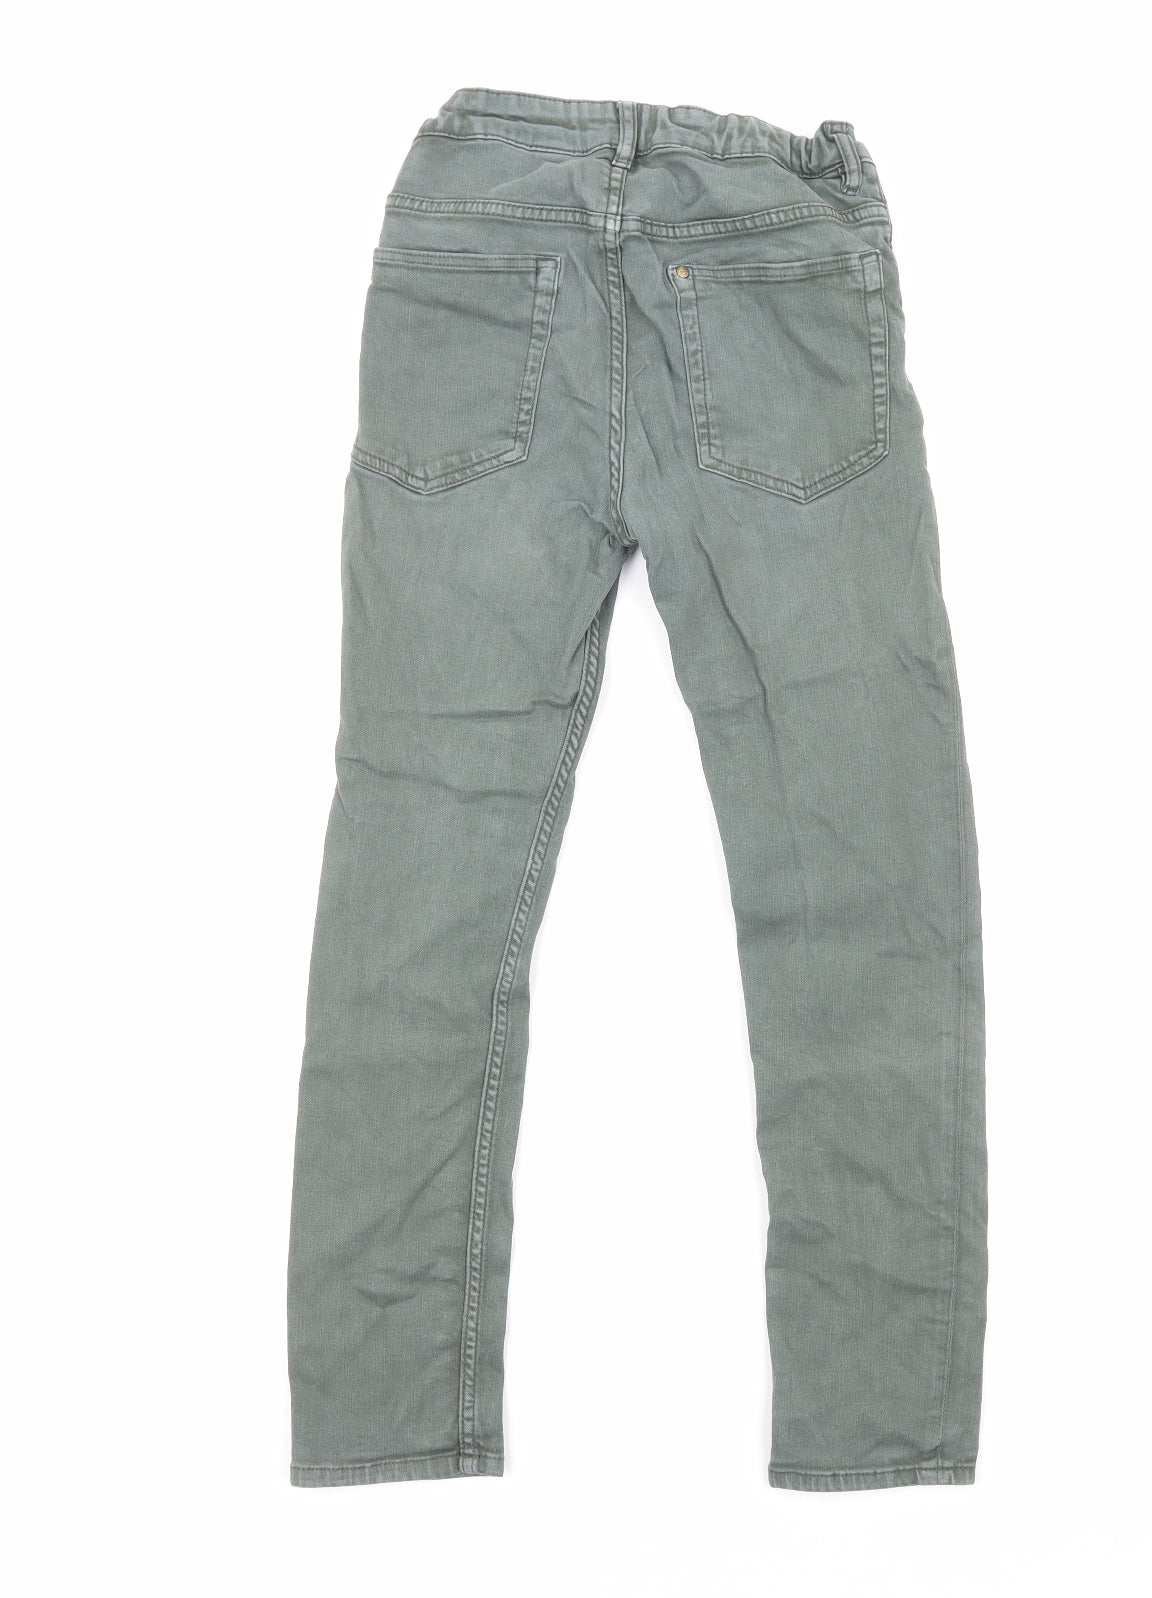 H&M Girls Green Cotton Skinny Jeans Size 10-11 Years Regular Zip - Distressed